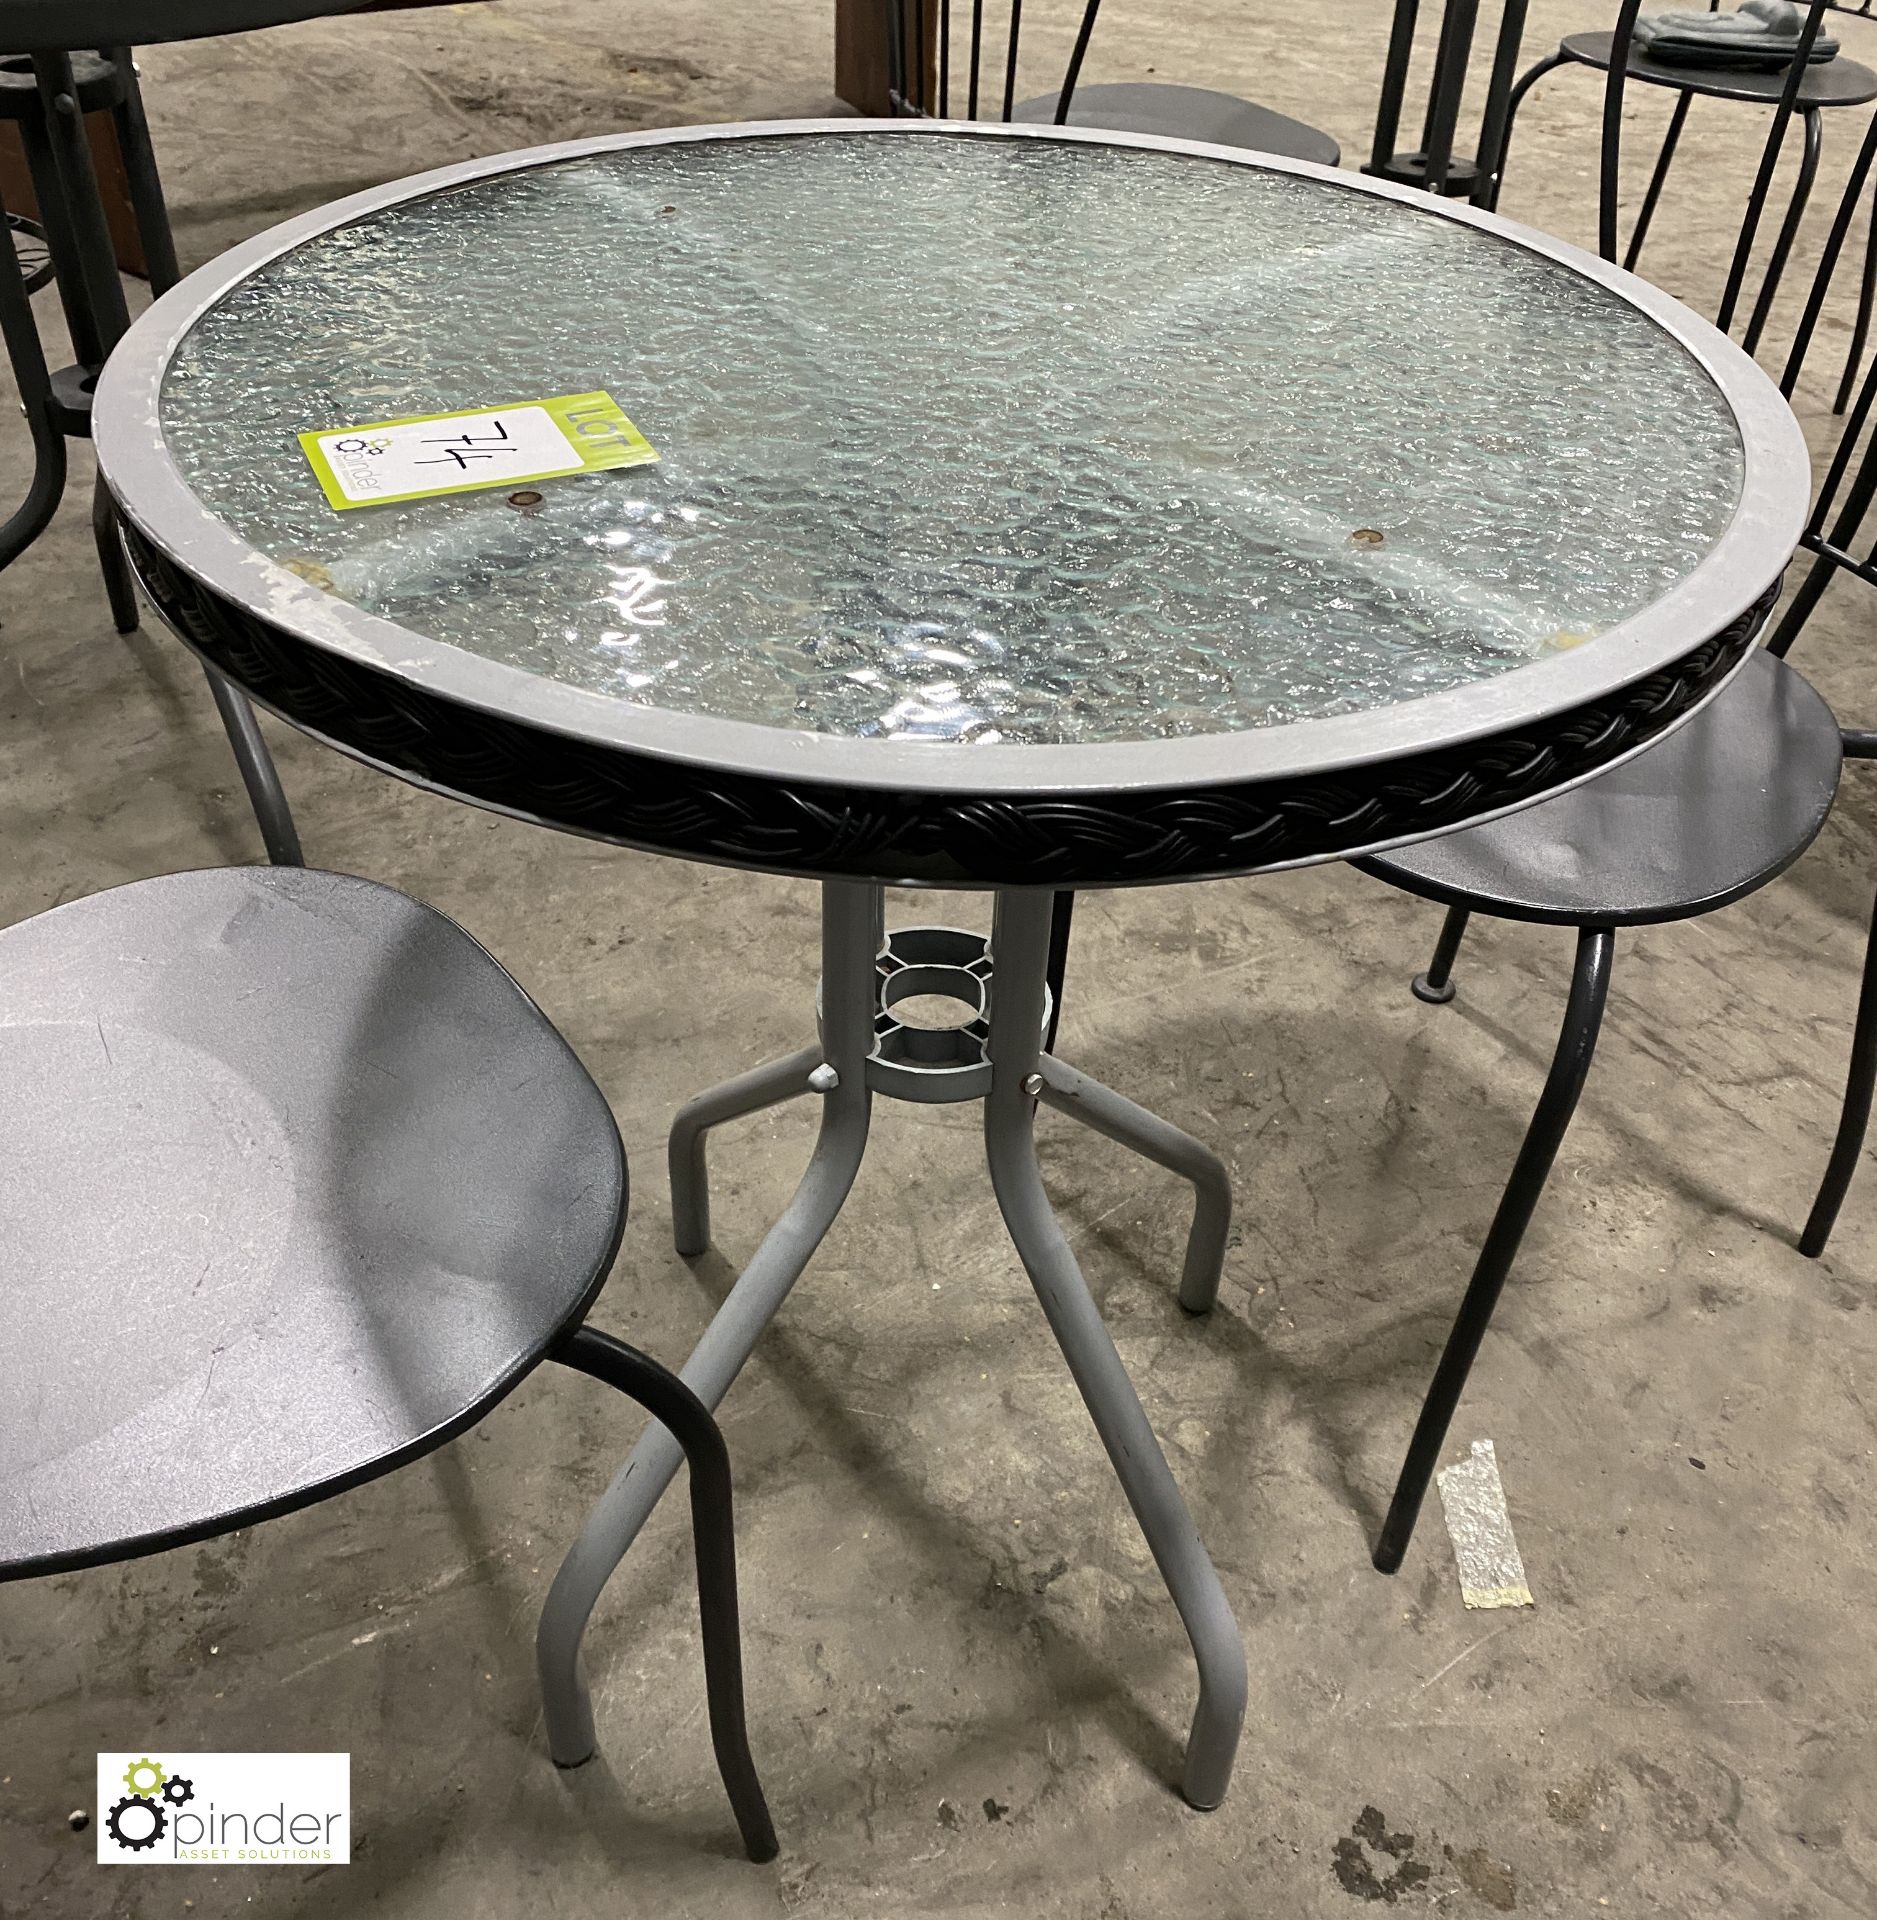 Glass top circular Café Table, 620mm diameter, with 2 tubular café chairs - Image 2 of 4